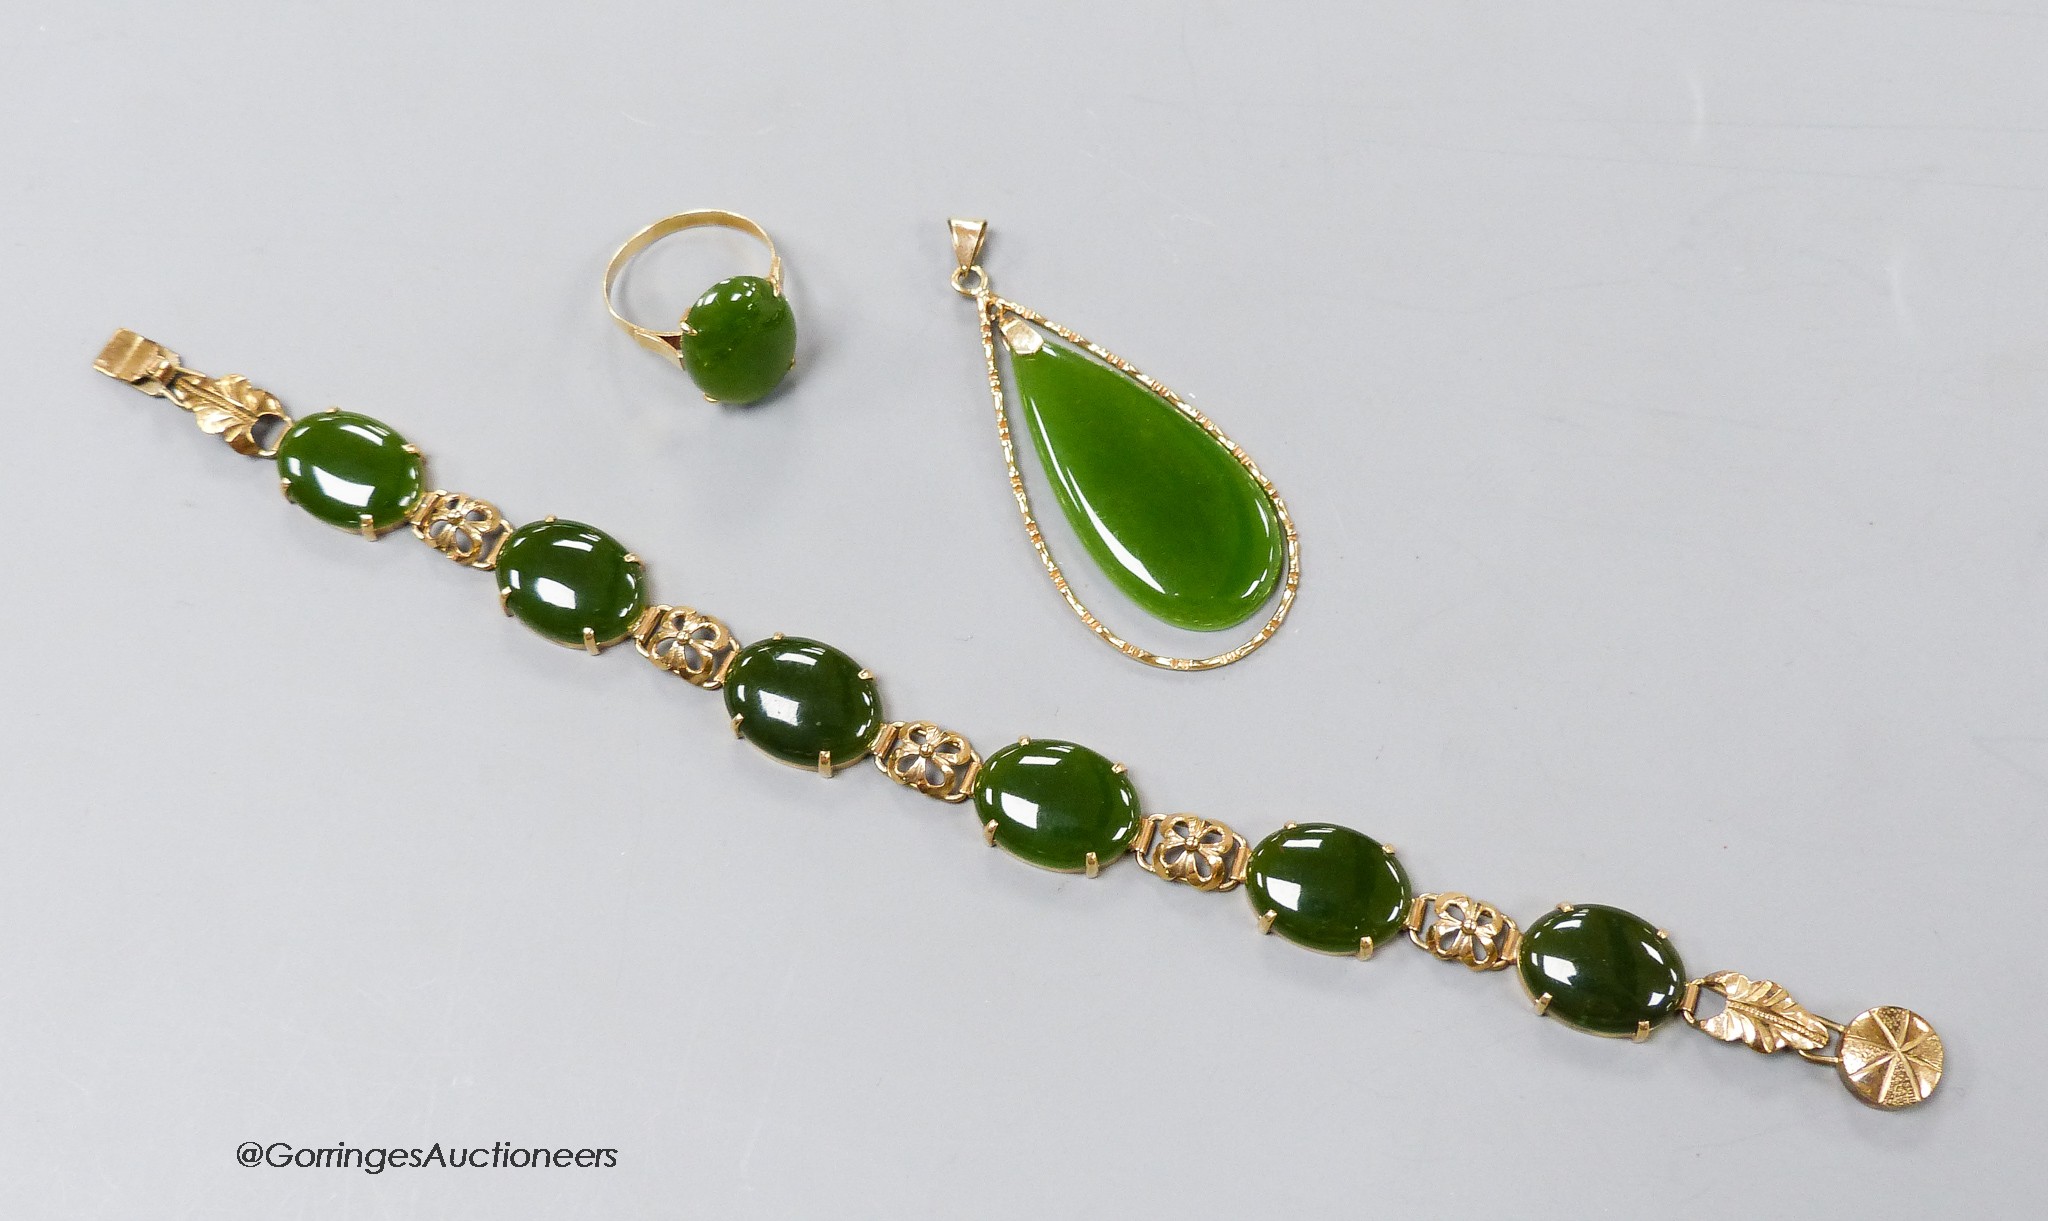 A 14k yellow metal and cabochon jade set bracelet, 18.5cm, gross 13.3 grams, an 18k mounted jade pendant and dress ring, gross 8.5 grams.